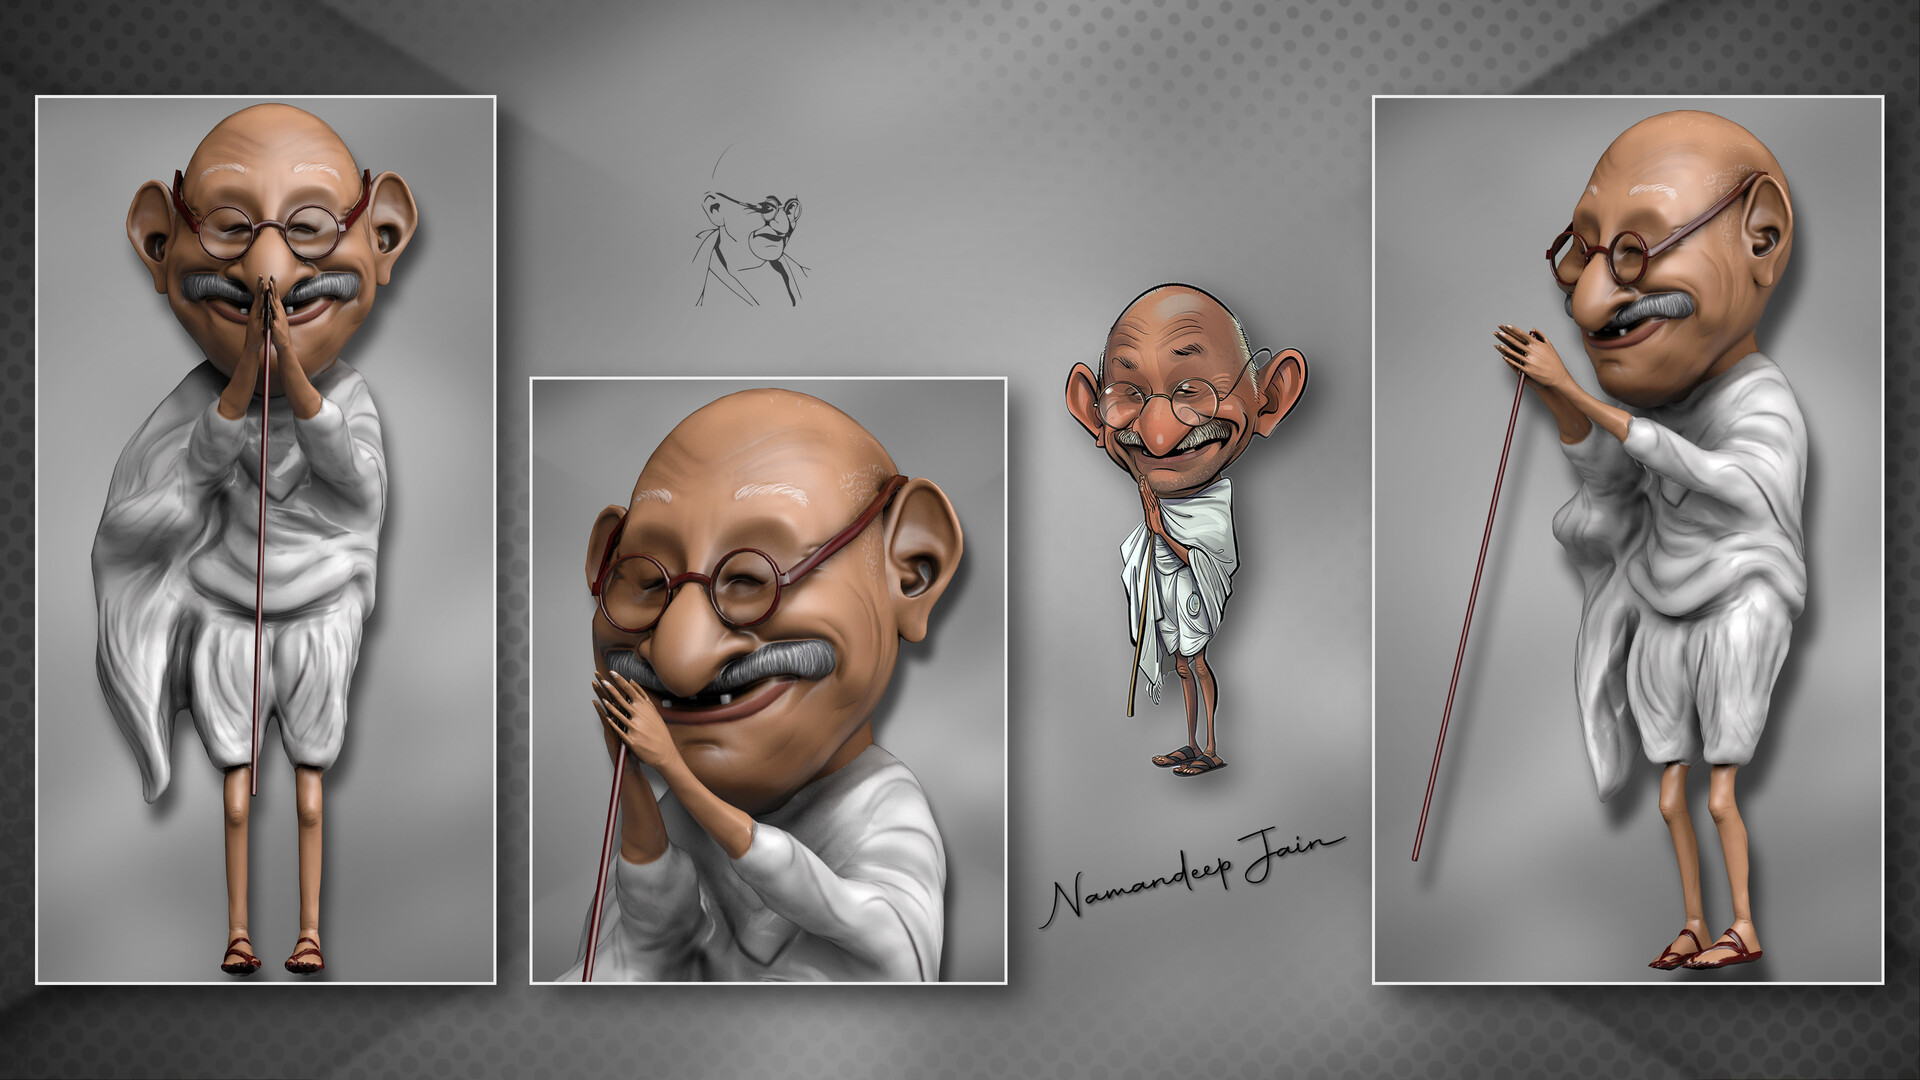 ArtStation - 3D caricature of Mahatma Gandhi